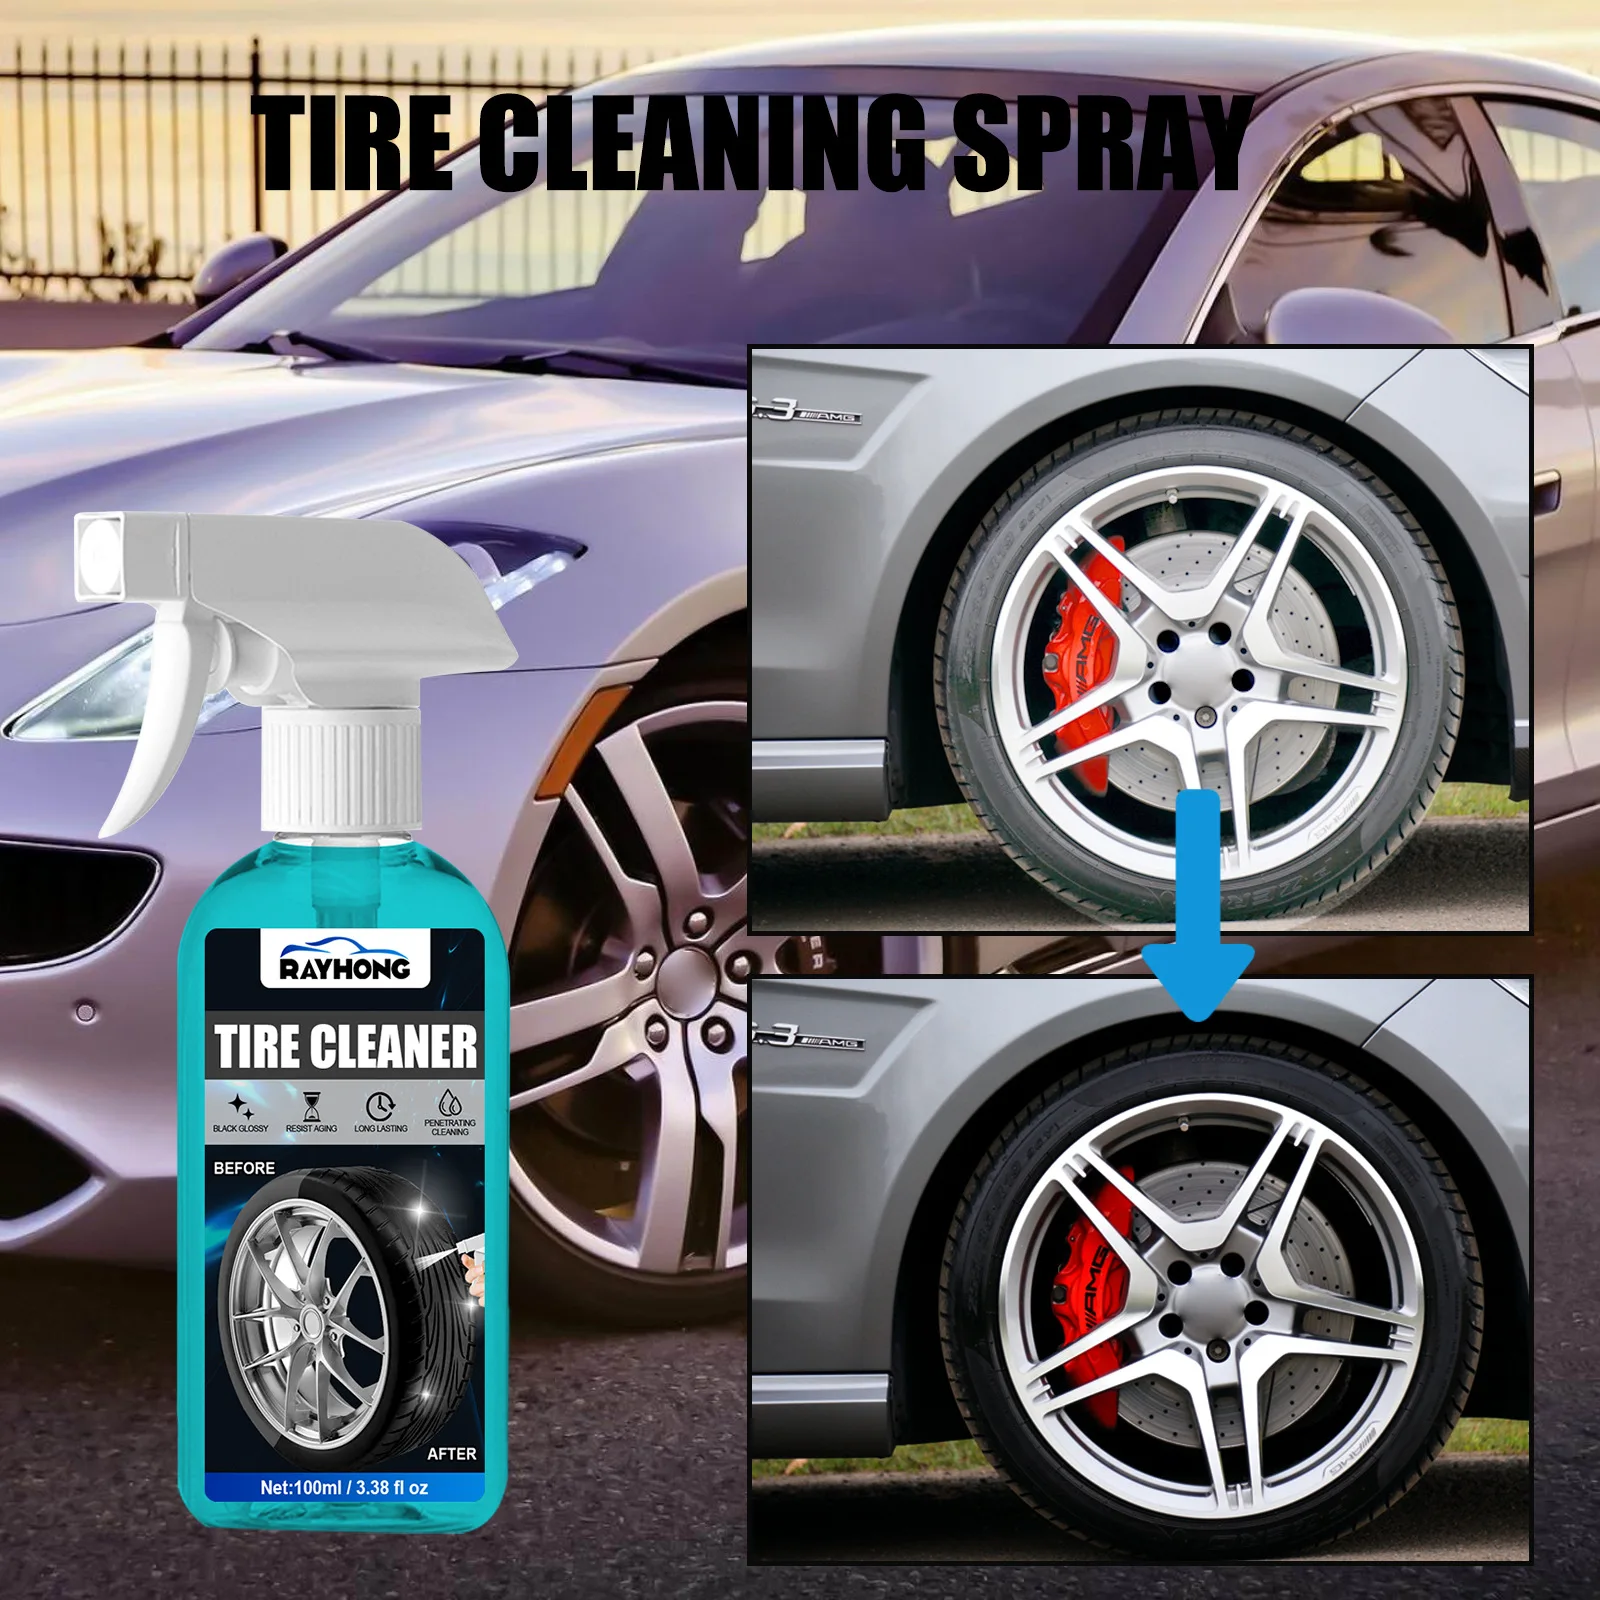 

Ray Hong 100ml Car Tire Shine Spray Car Wheel Tire Cleaning Refurbishing Spraying Car Agent Wax Cleaner Paint Coating Polishing